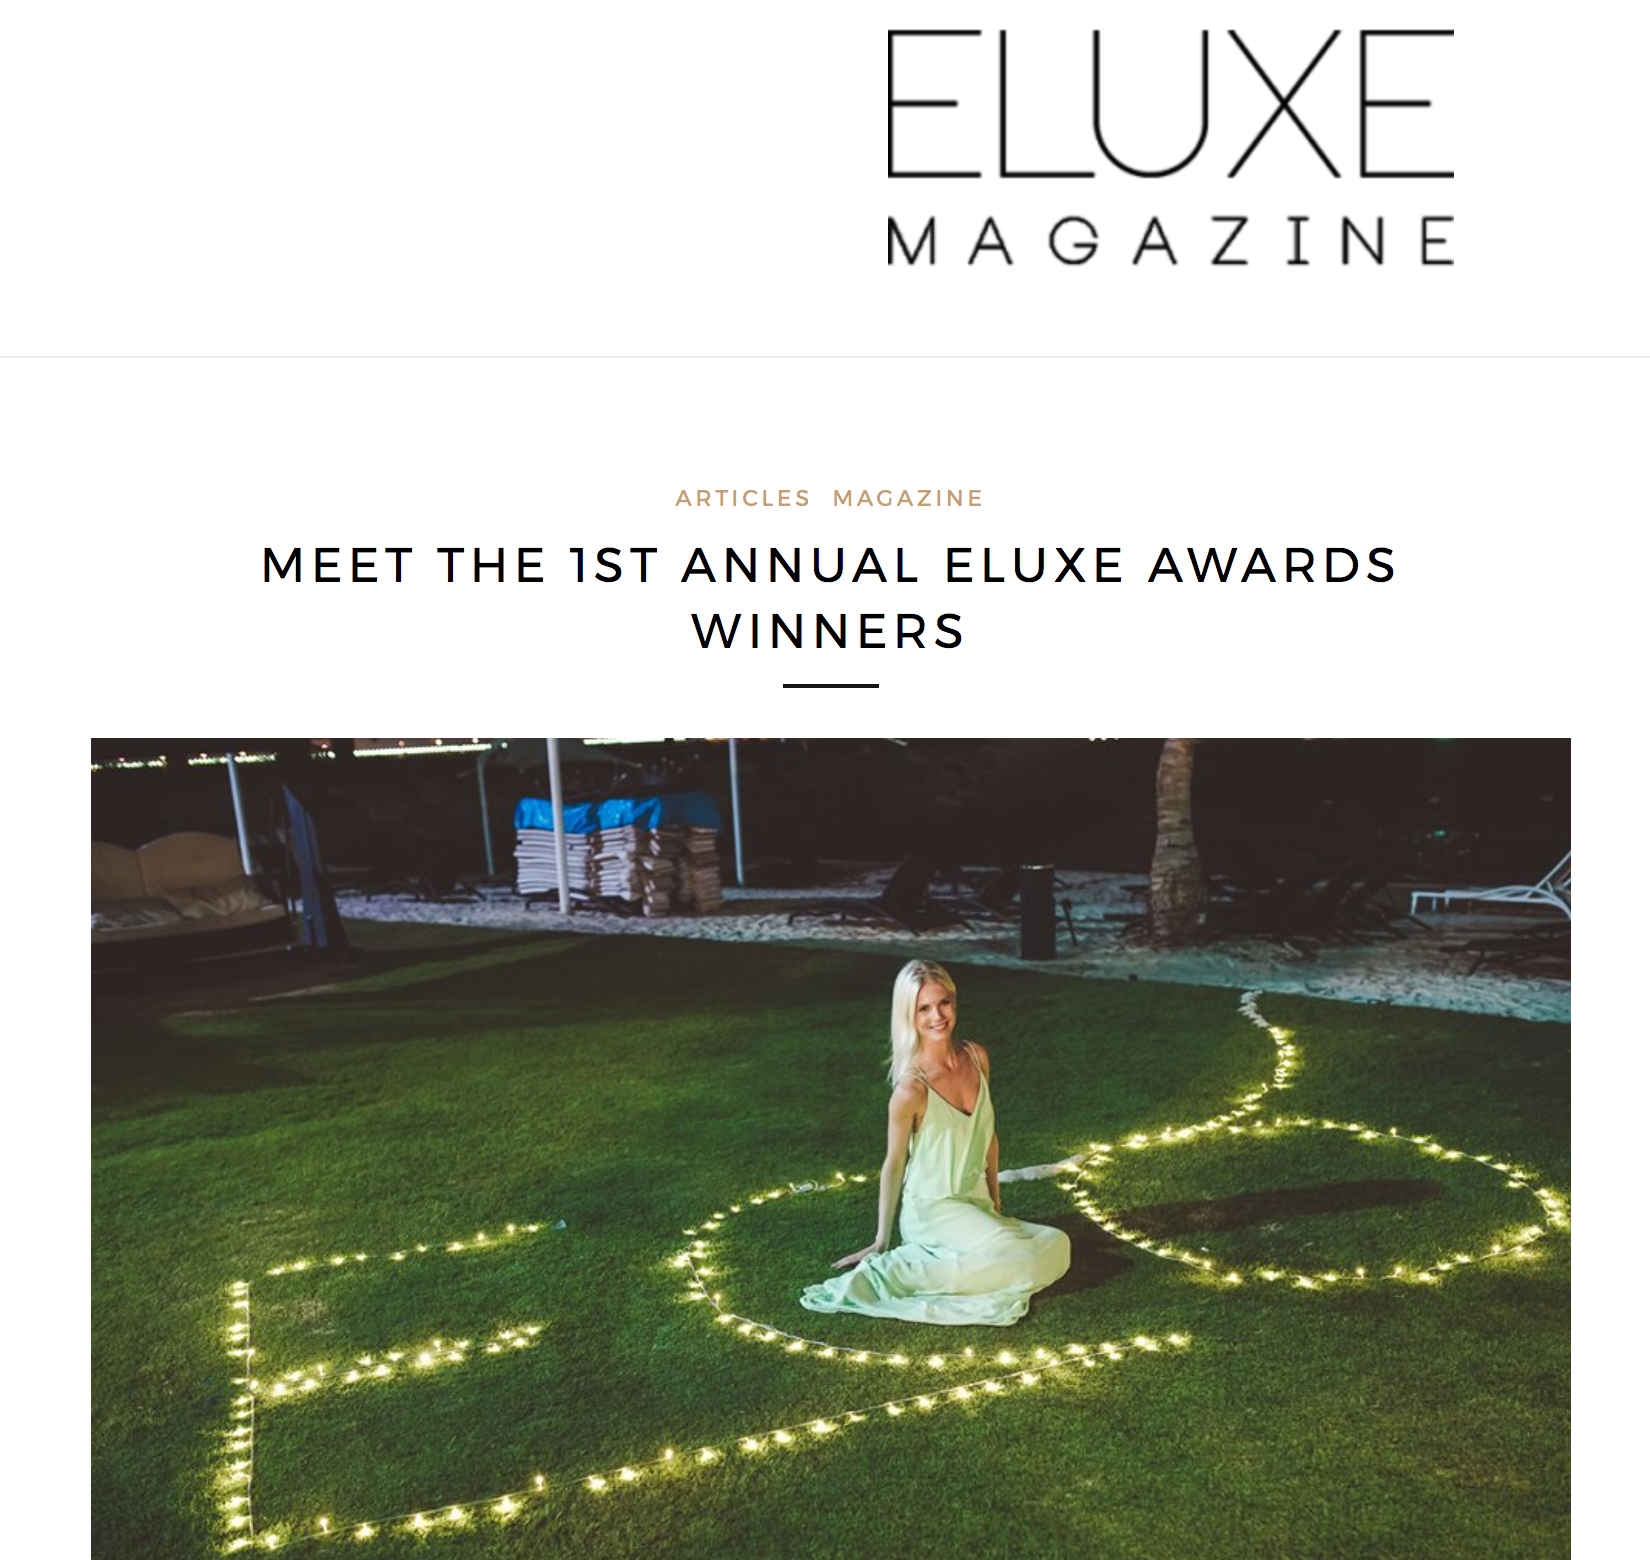 ELUXE MAGAZINE AWARD 2017